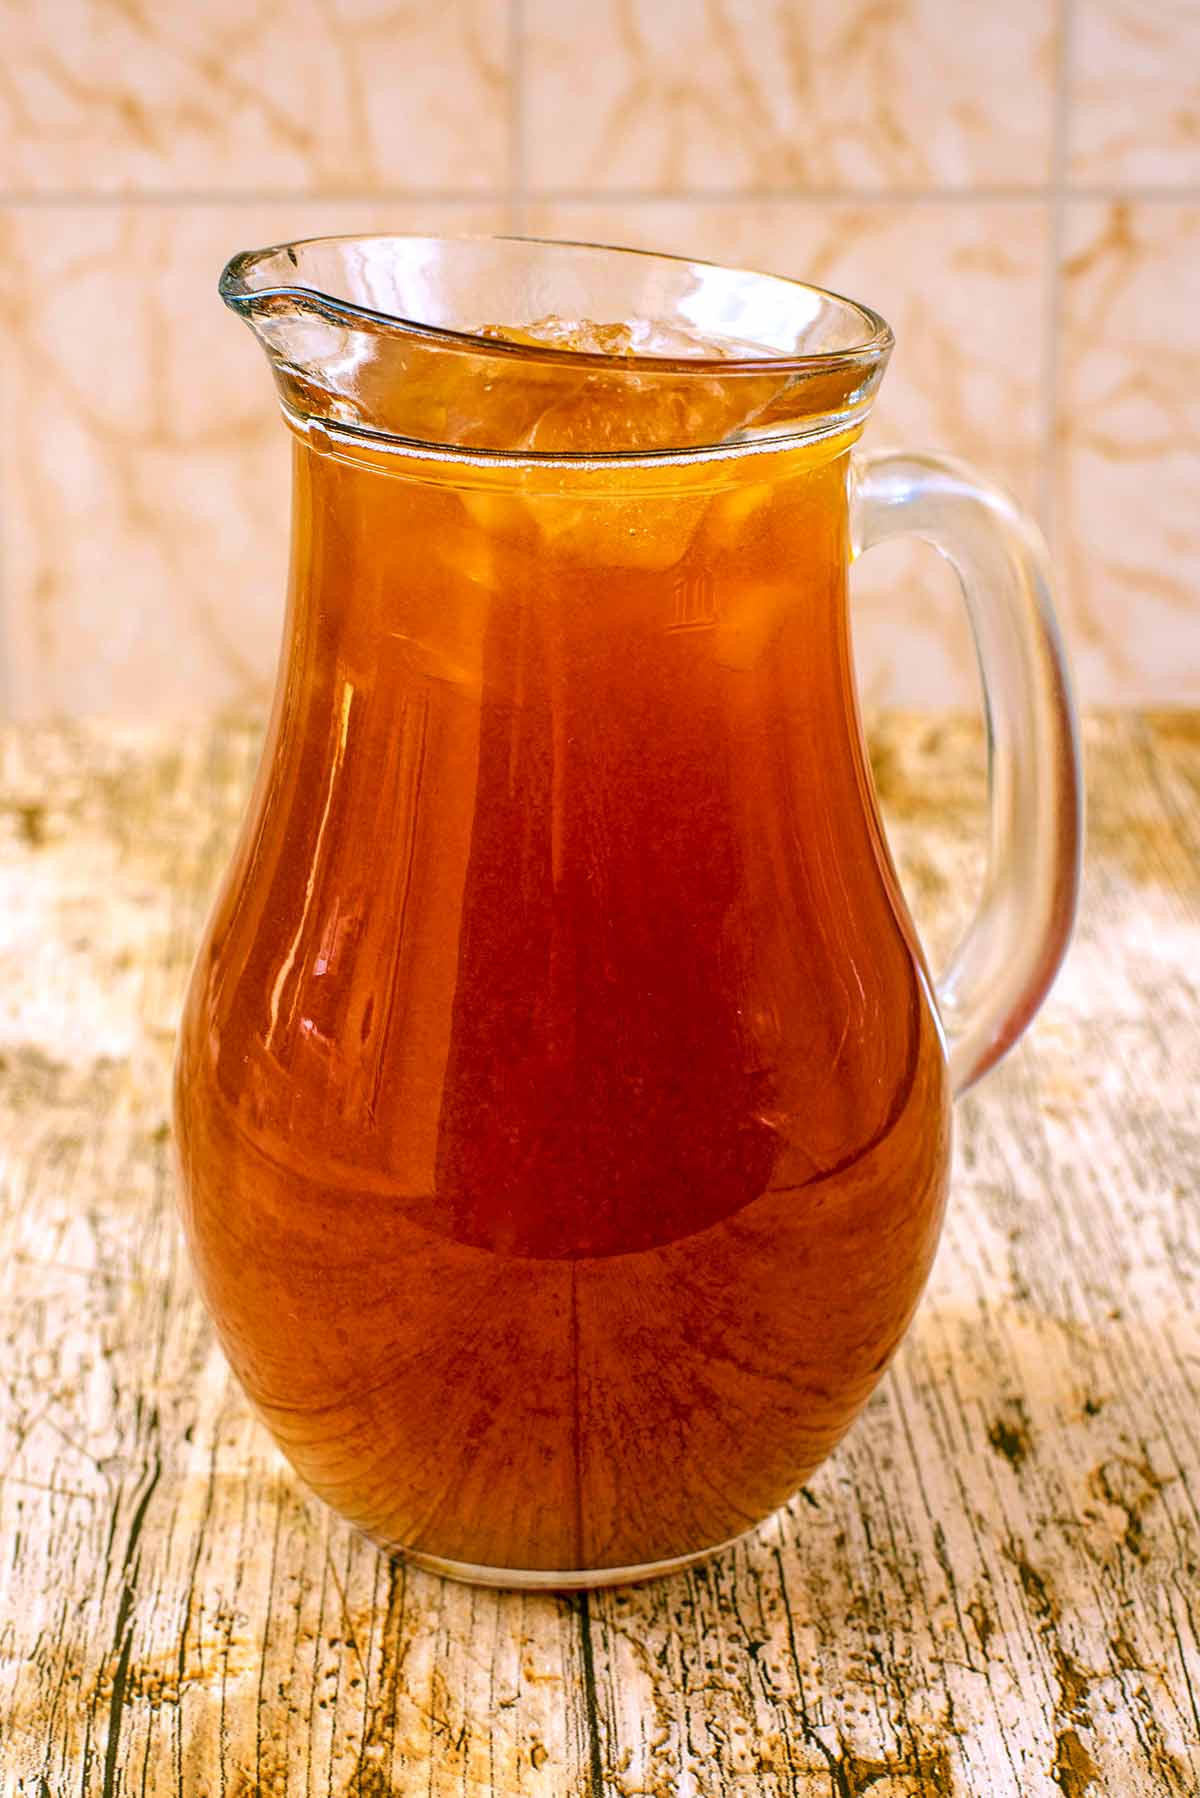 A glass jug full of iced tea.